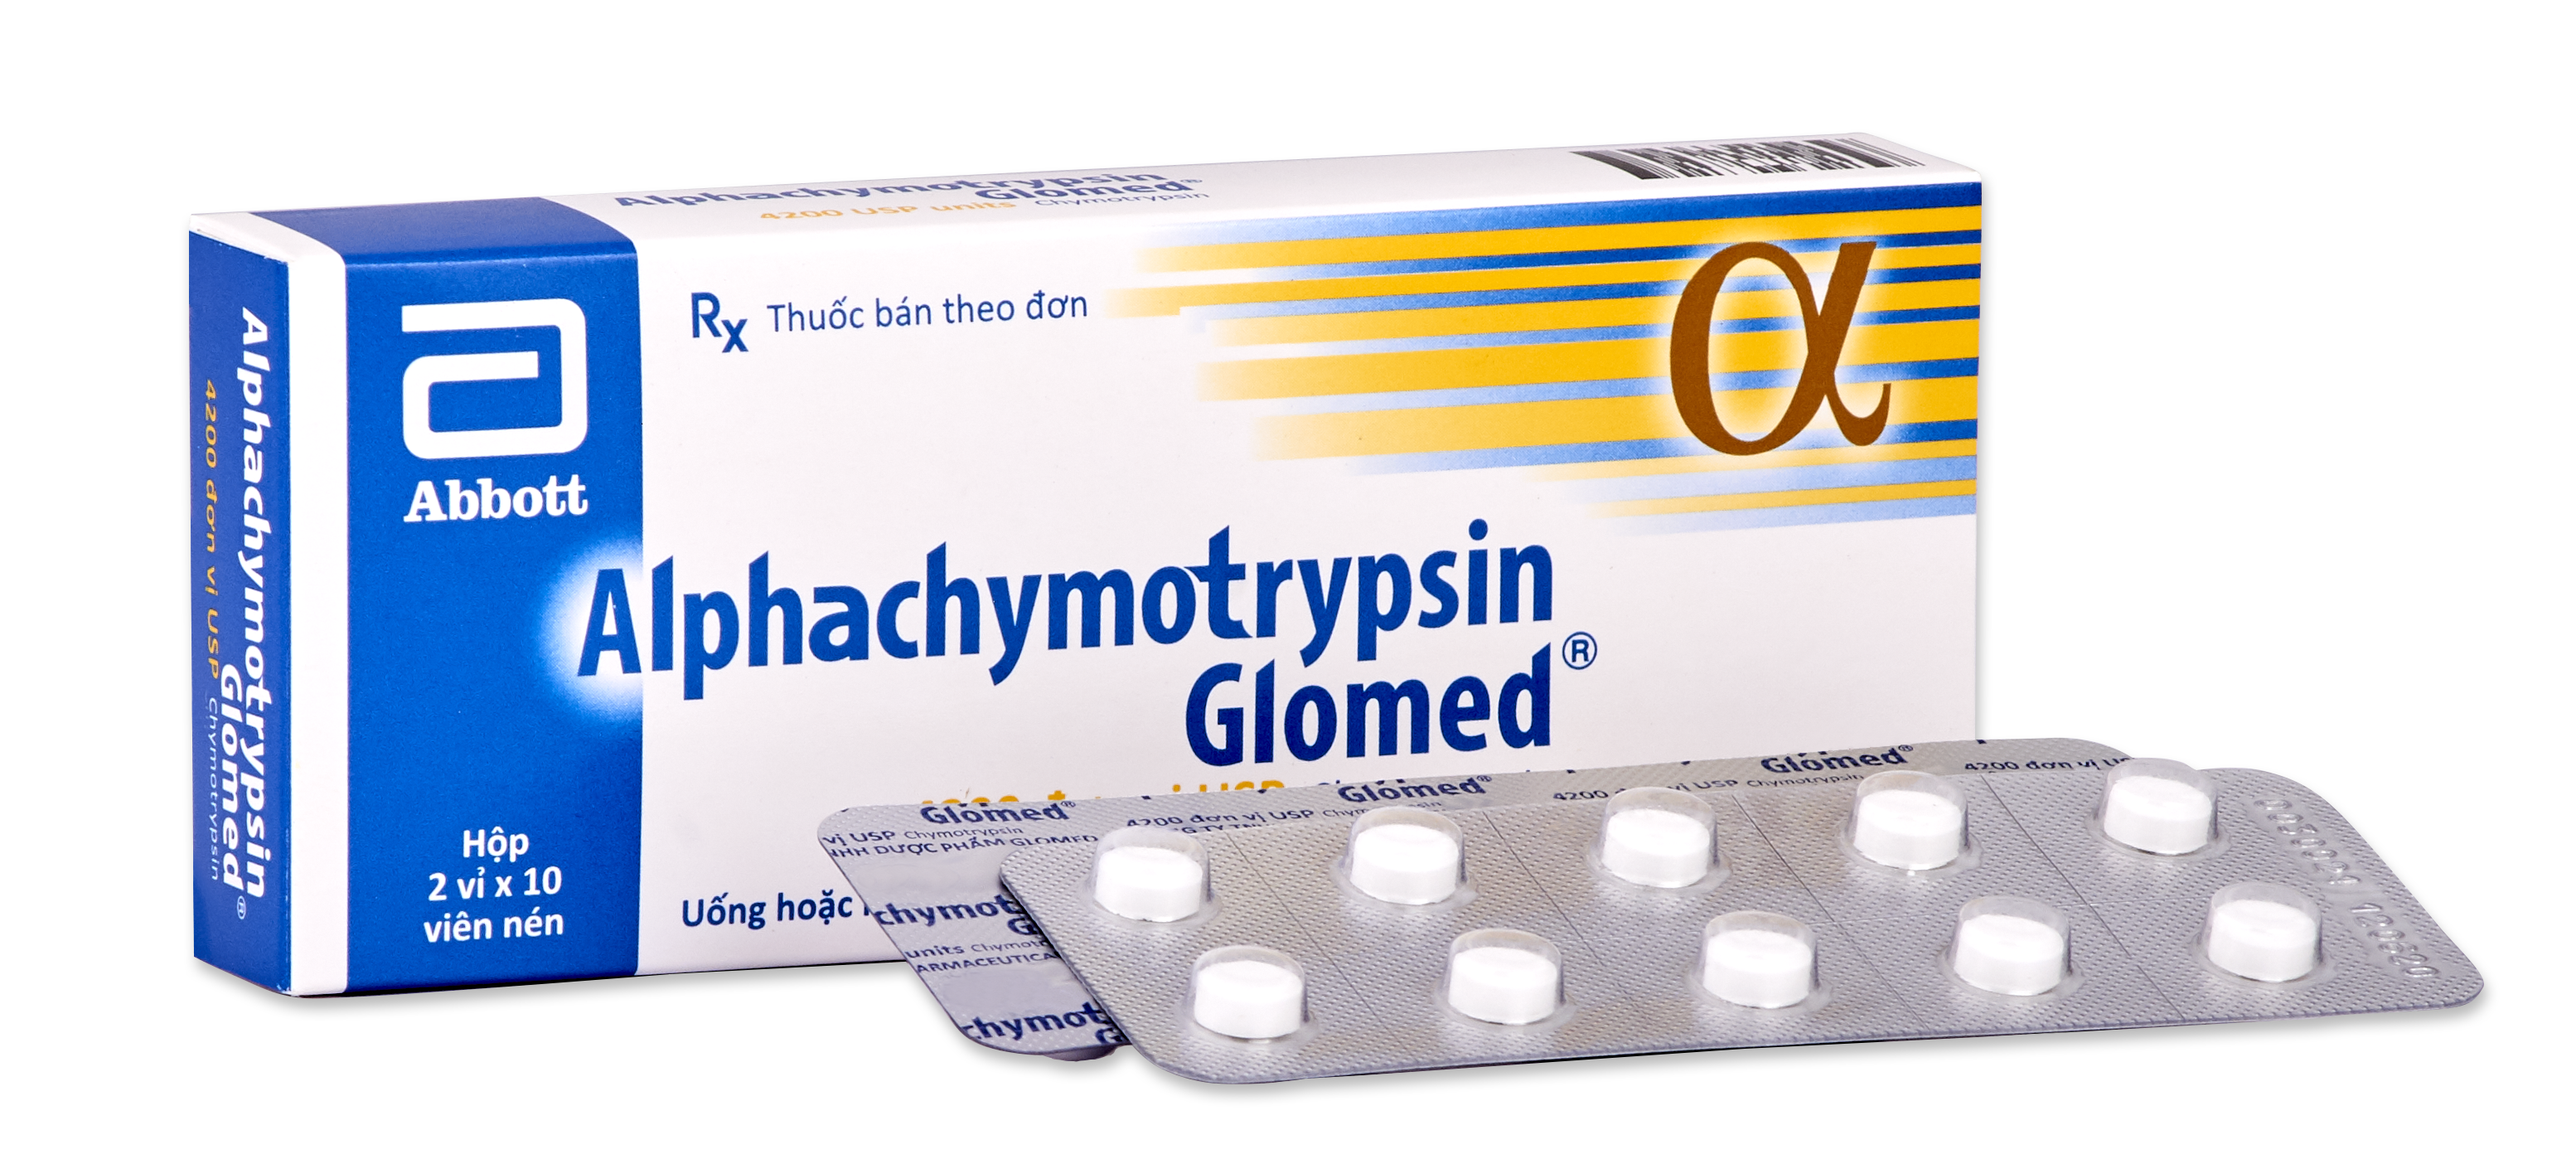 Alphachymotrypsin 4200 USP Glomed (H/20v)